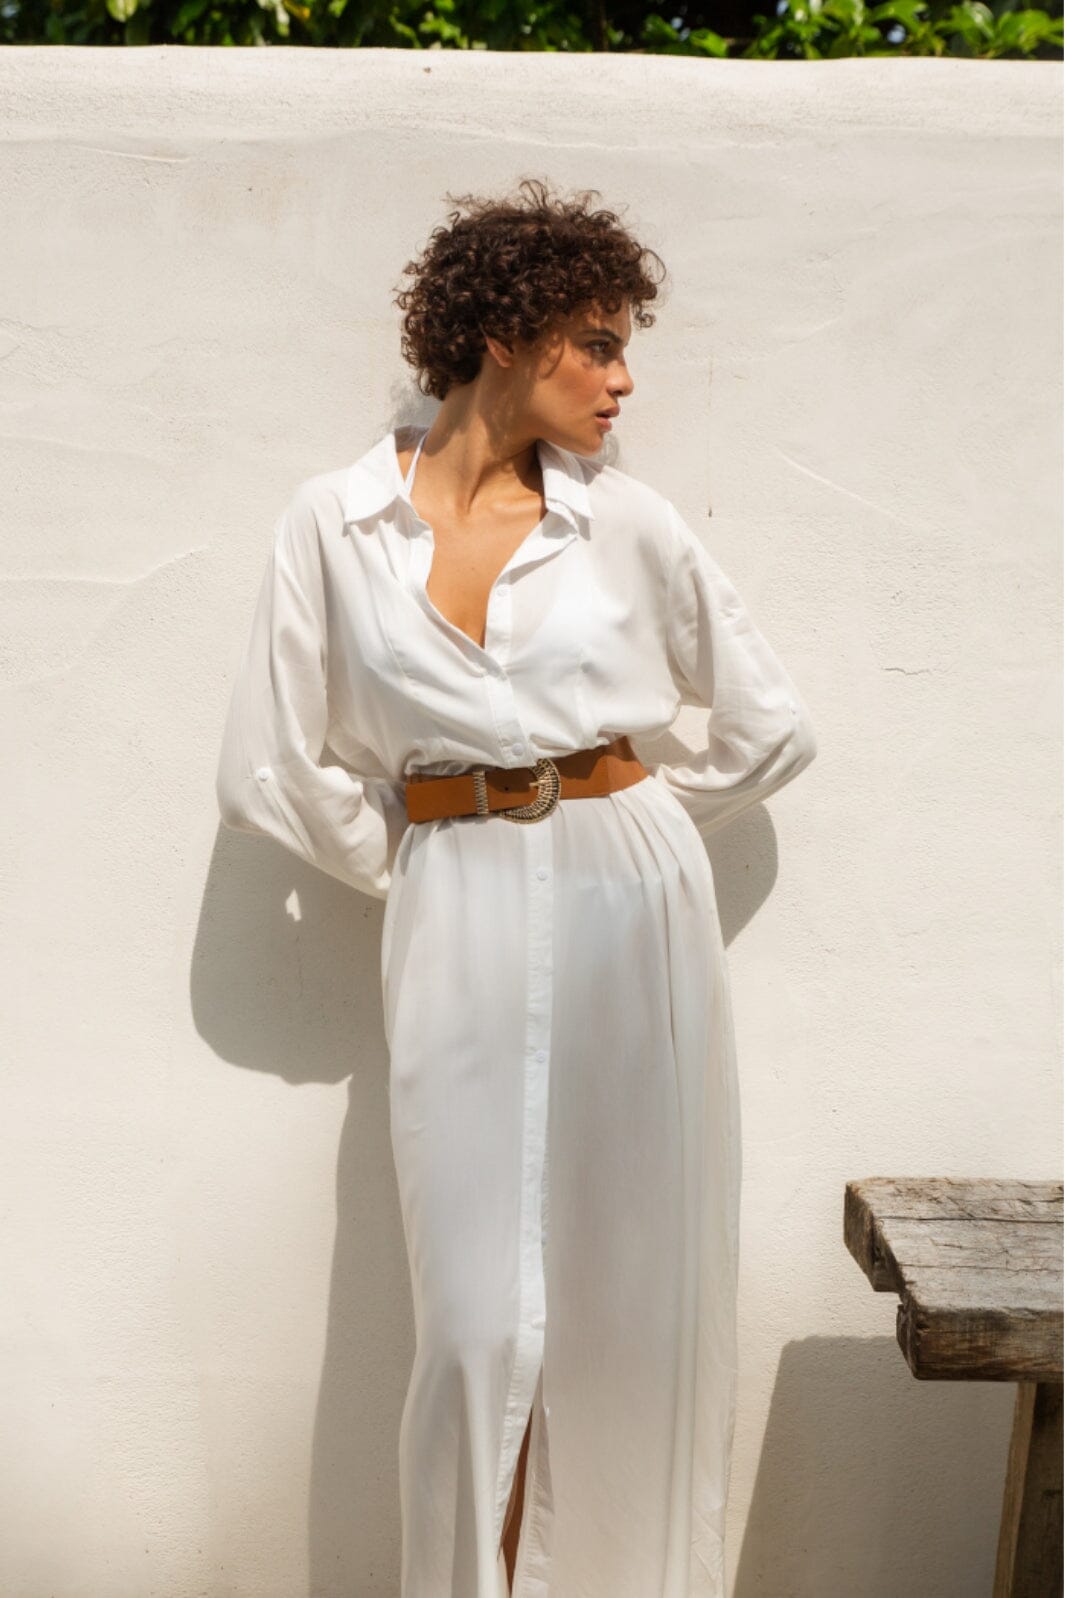 A-bee - Solid long shirtdress 113 - White Kjoler 